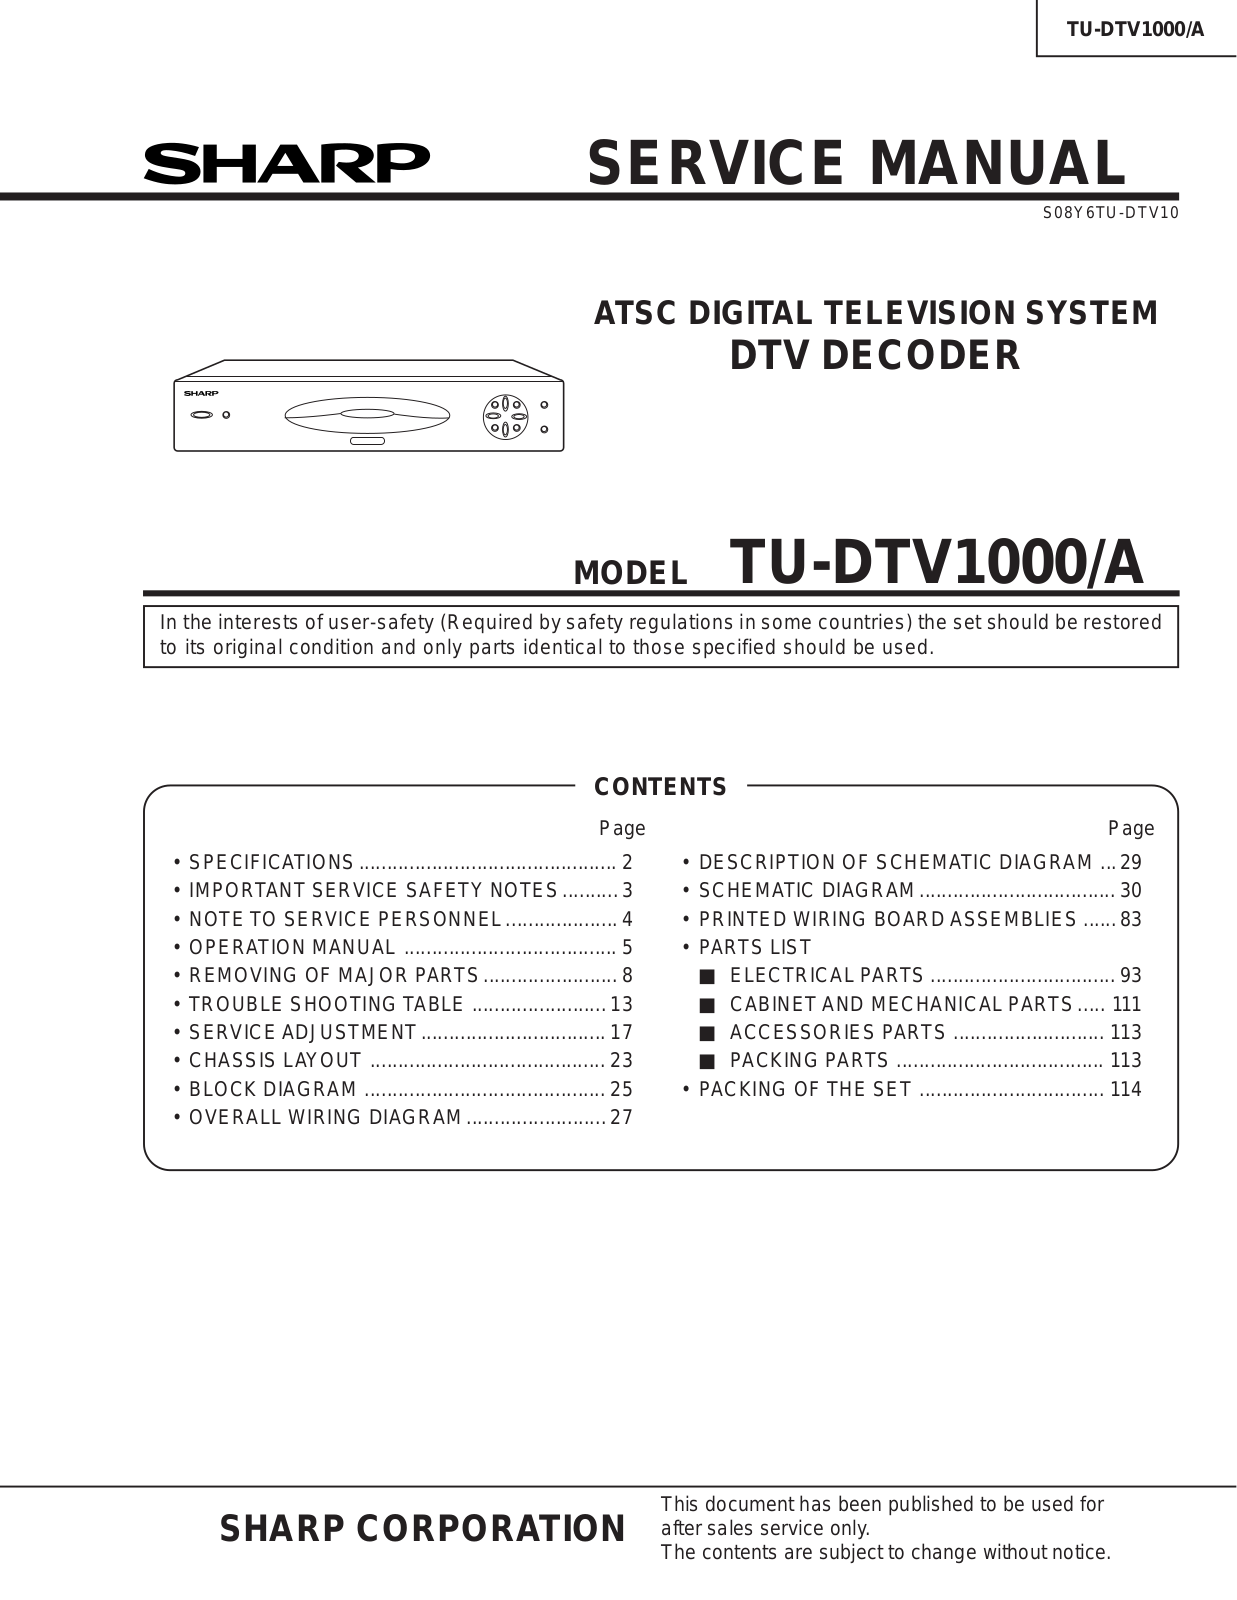 Sharp TUDTV100, TU-DTV1000-A Service Manual